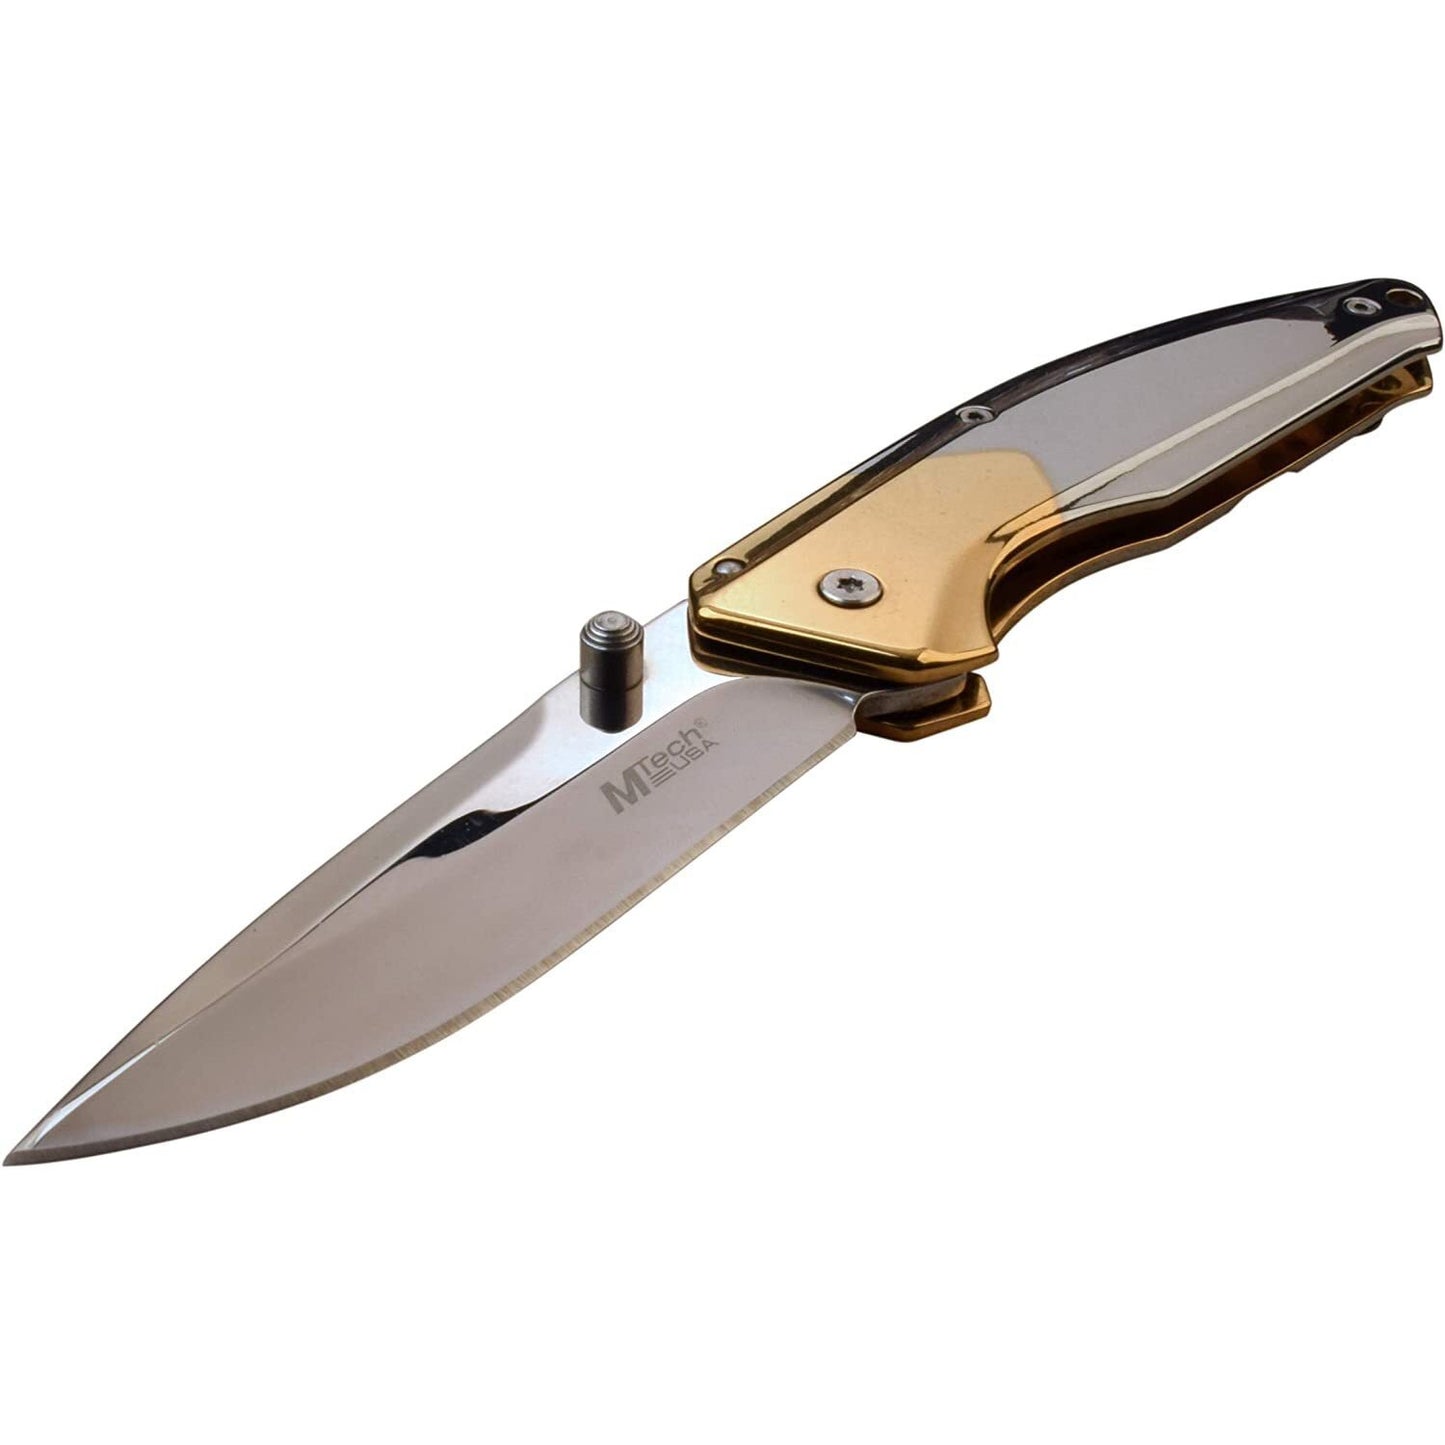 Mtech Mtech Tactical Drop Point Fine Edge Blade Folding Knife - Tinite Coated Handle Frame Lock #mt-1032Gd Tan